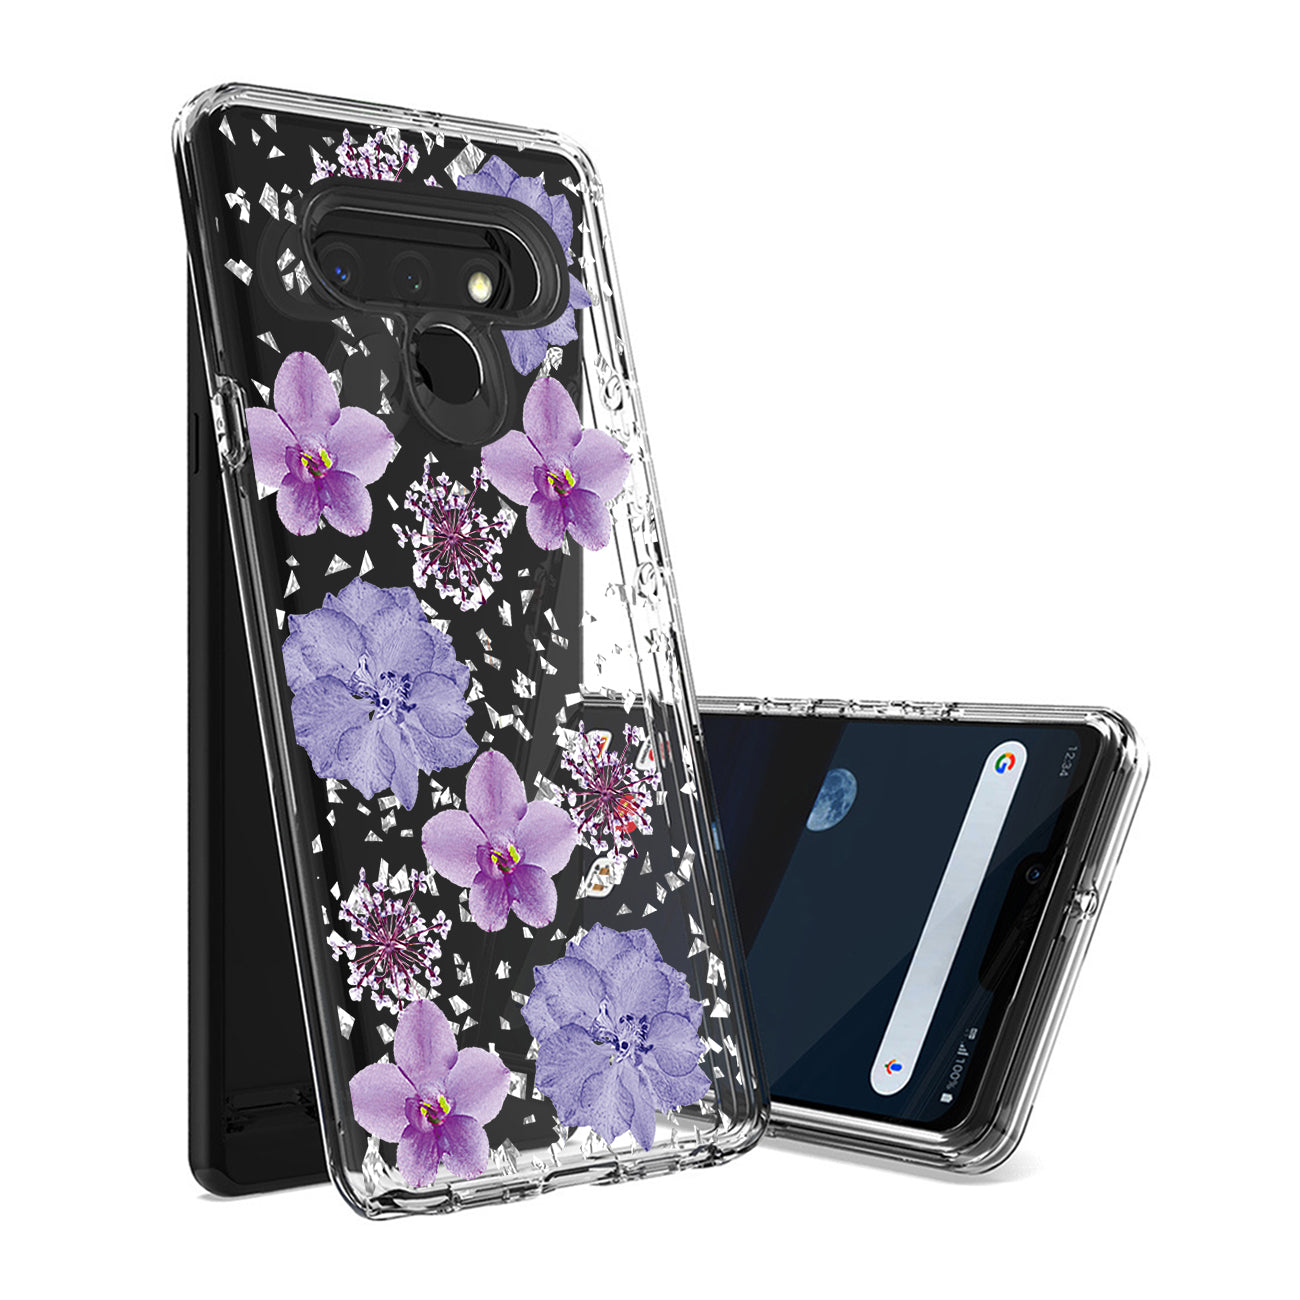 Phone Case Pressed Dried Flower Design LG Stylo 6 Purple Color